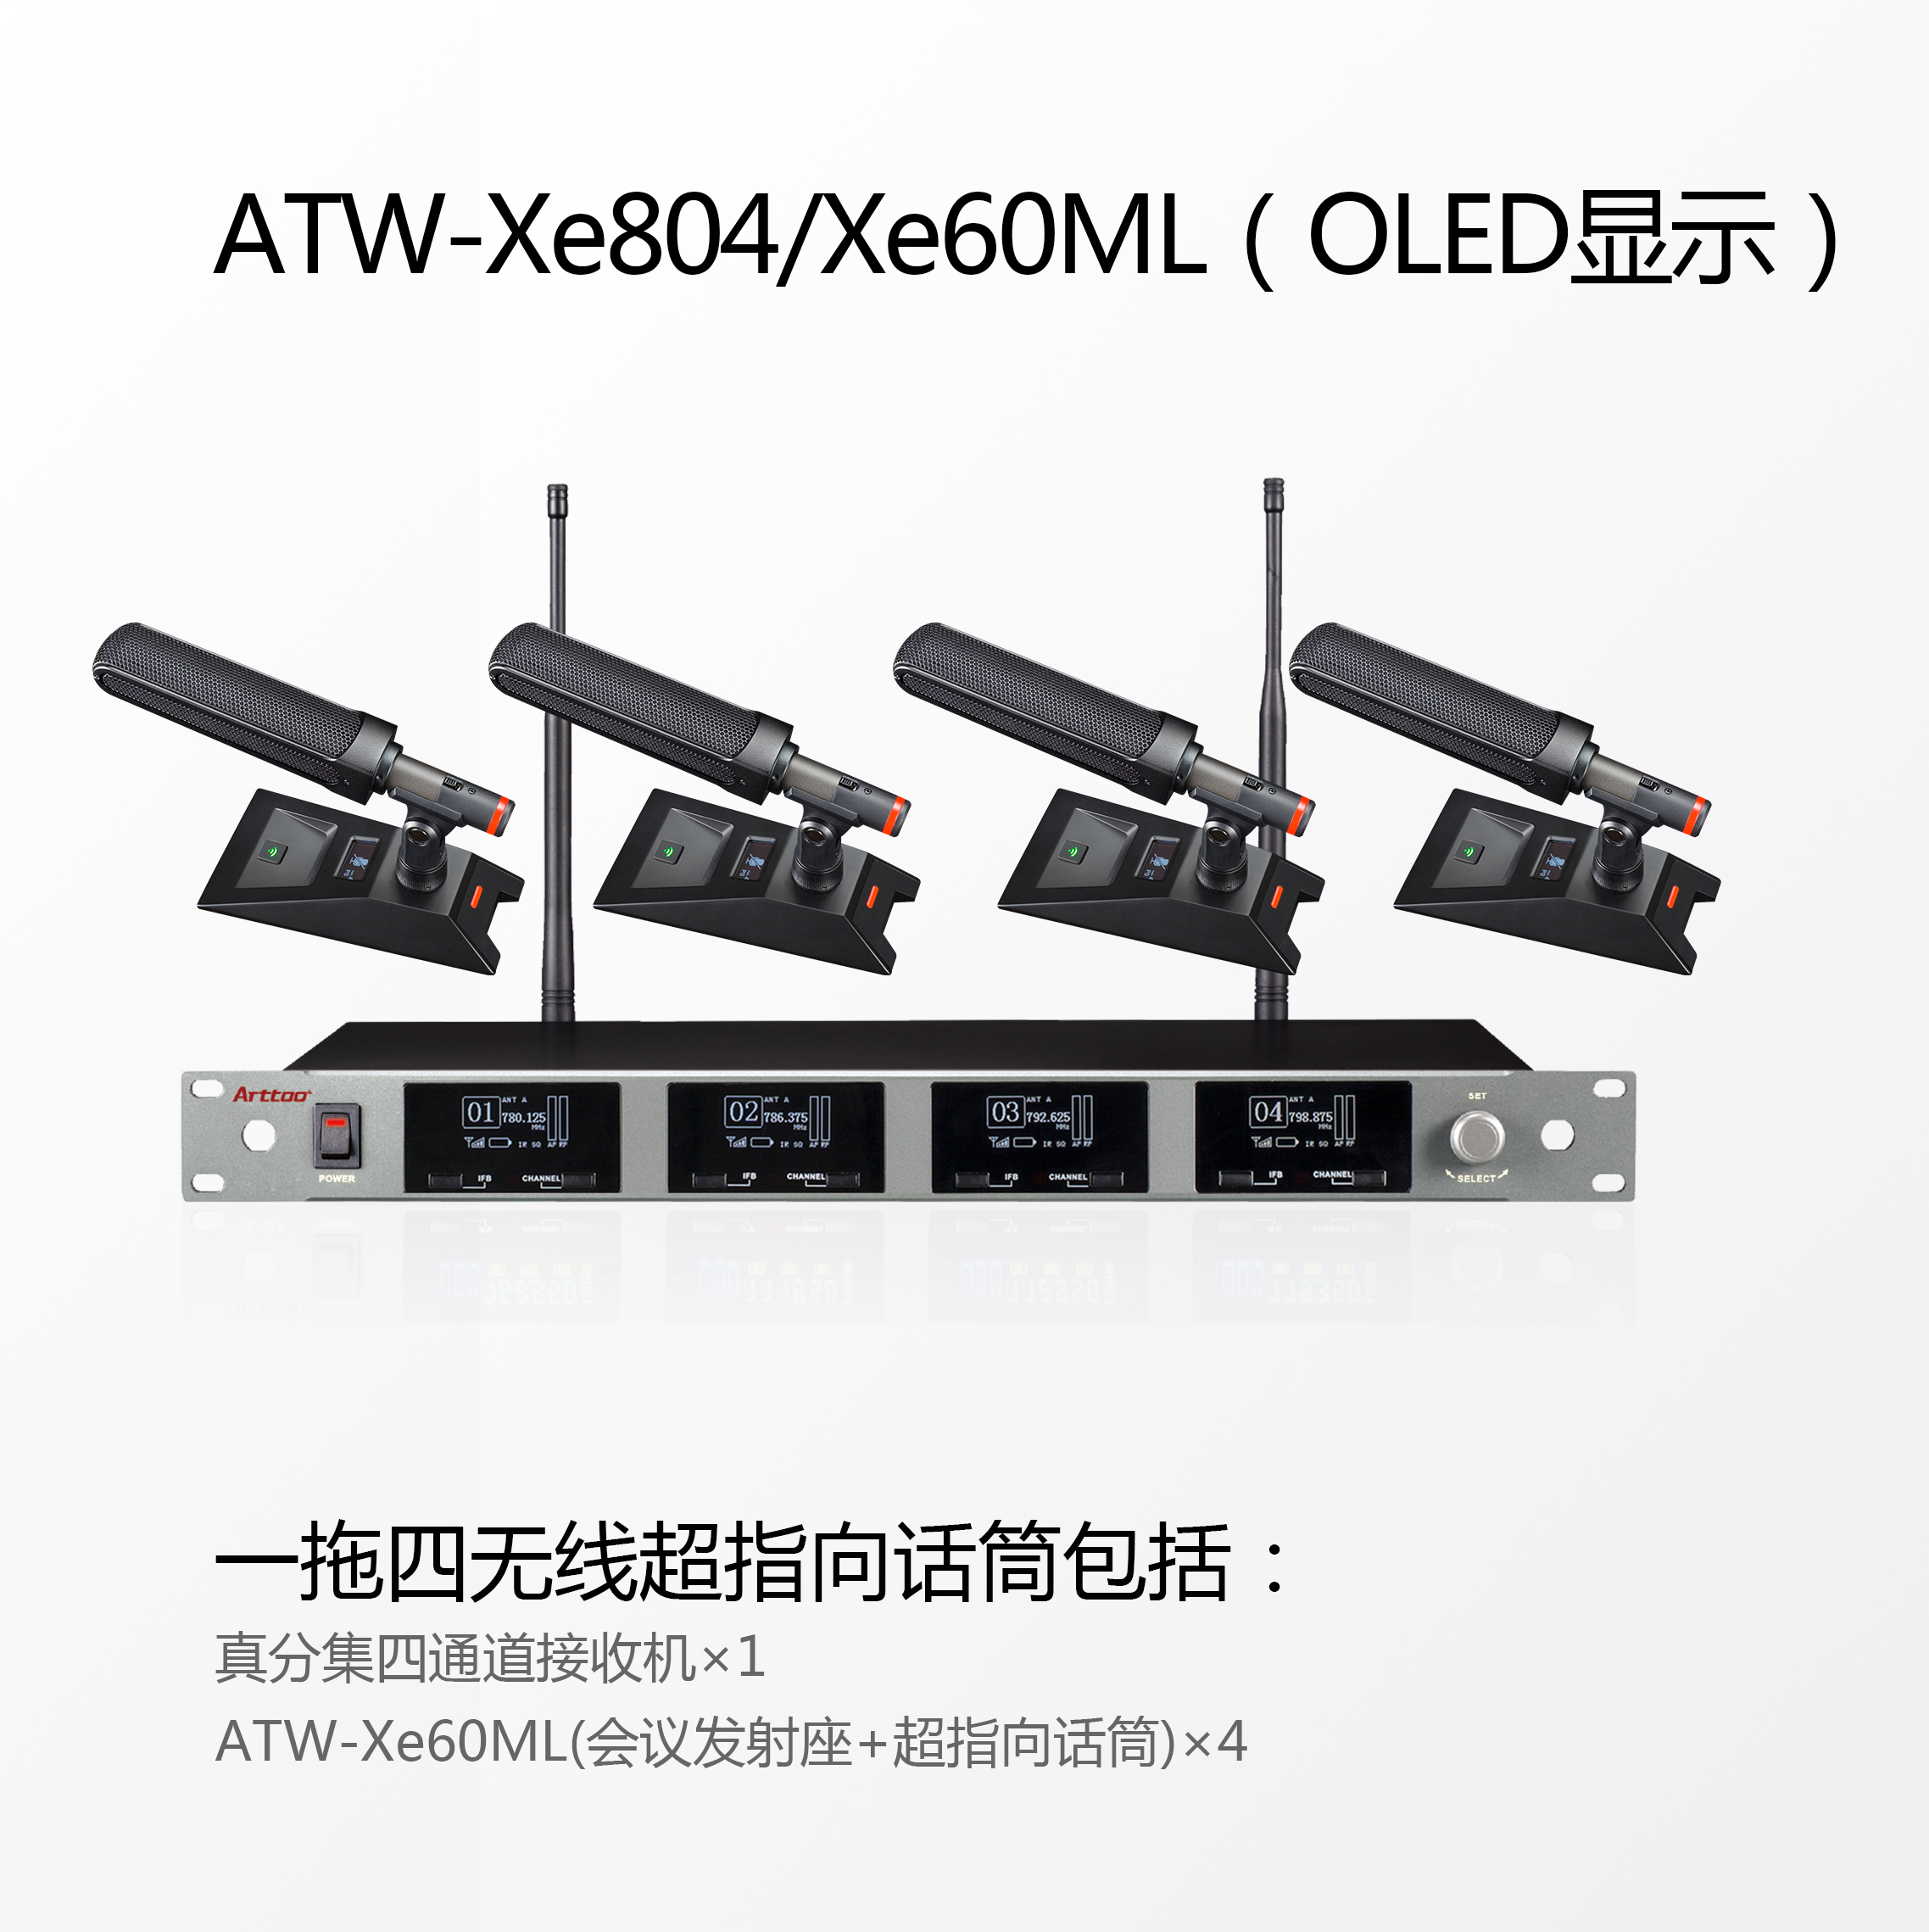 Arttoo安度 ATW-XE804/60ML采用UHF超高频段真分集接收；频率分集在两个独立的频率上同时传输，确保执行关键任务的信道不间断的实现无线音频传输，环境电磁波检测并以信号图形式显示，调节频率时自动根据现场电磁波情况计算最合适的使用频率，红外线数据自动同步功能(SYNC)，使用者可通过手动方式及主机扫频功能转到清晰无干扰的兼容频率，采用特性最稳定的锁相环回路合成调谐器(PLL),可有效阻隔环境中的嘈杂射频干扰；在发生干扰时自动搜索找到清晰无干扰的频率，发射咪采用超宽频50MHz, 可自动变频，4商品主图